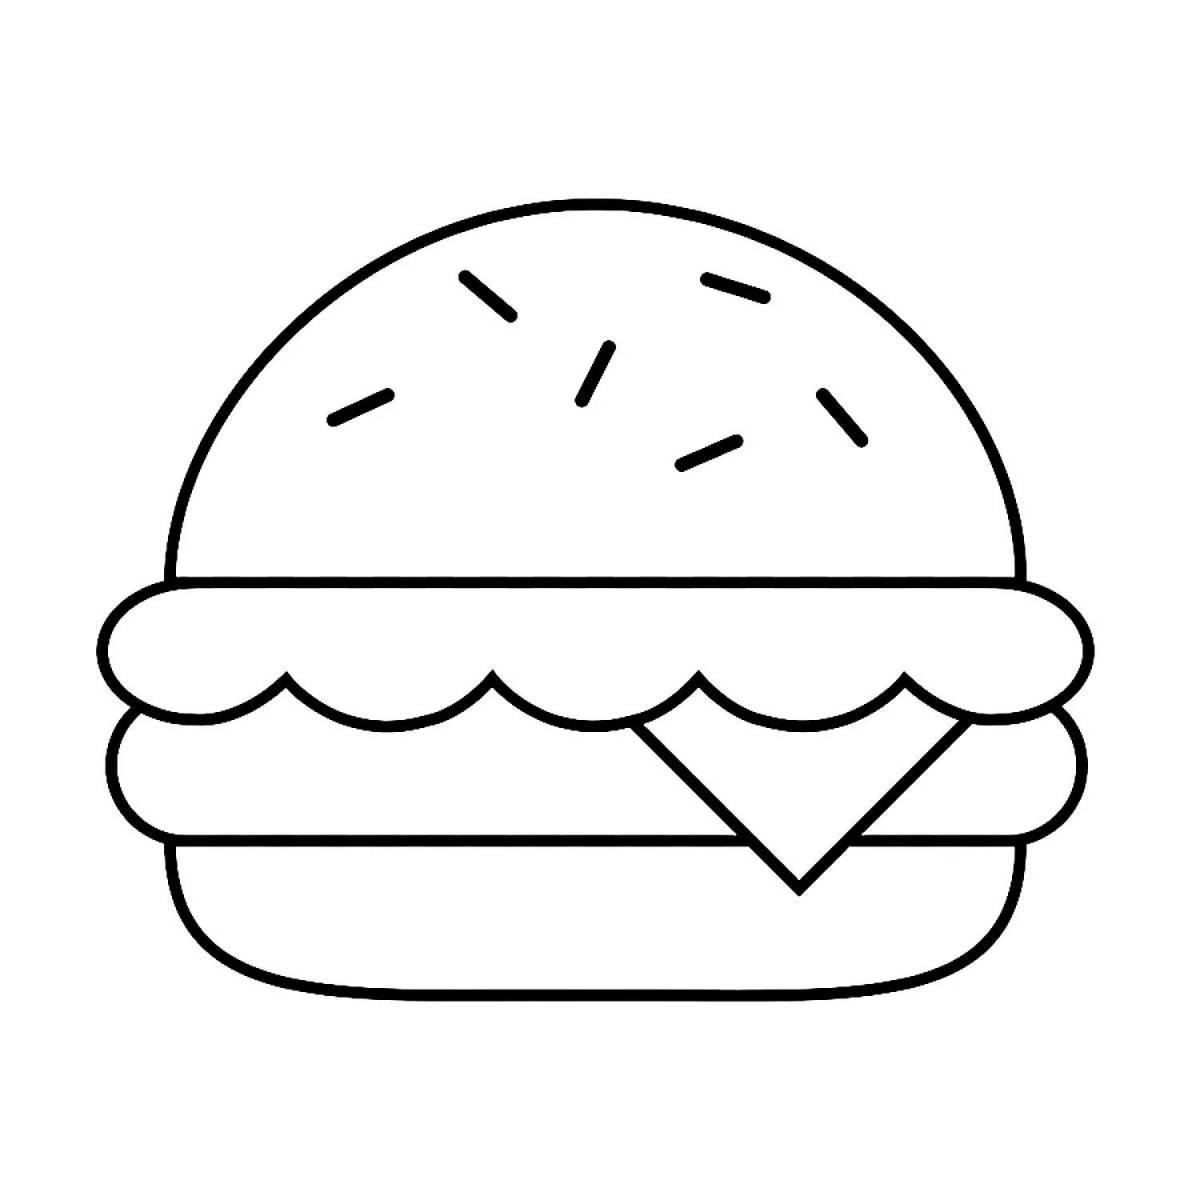 Hamburger for kids #12